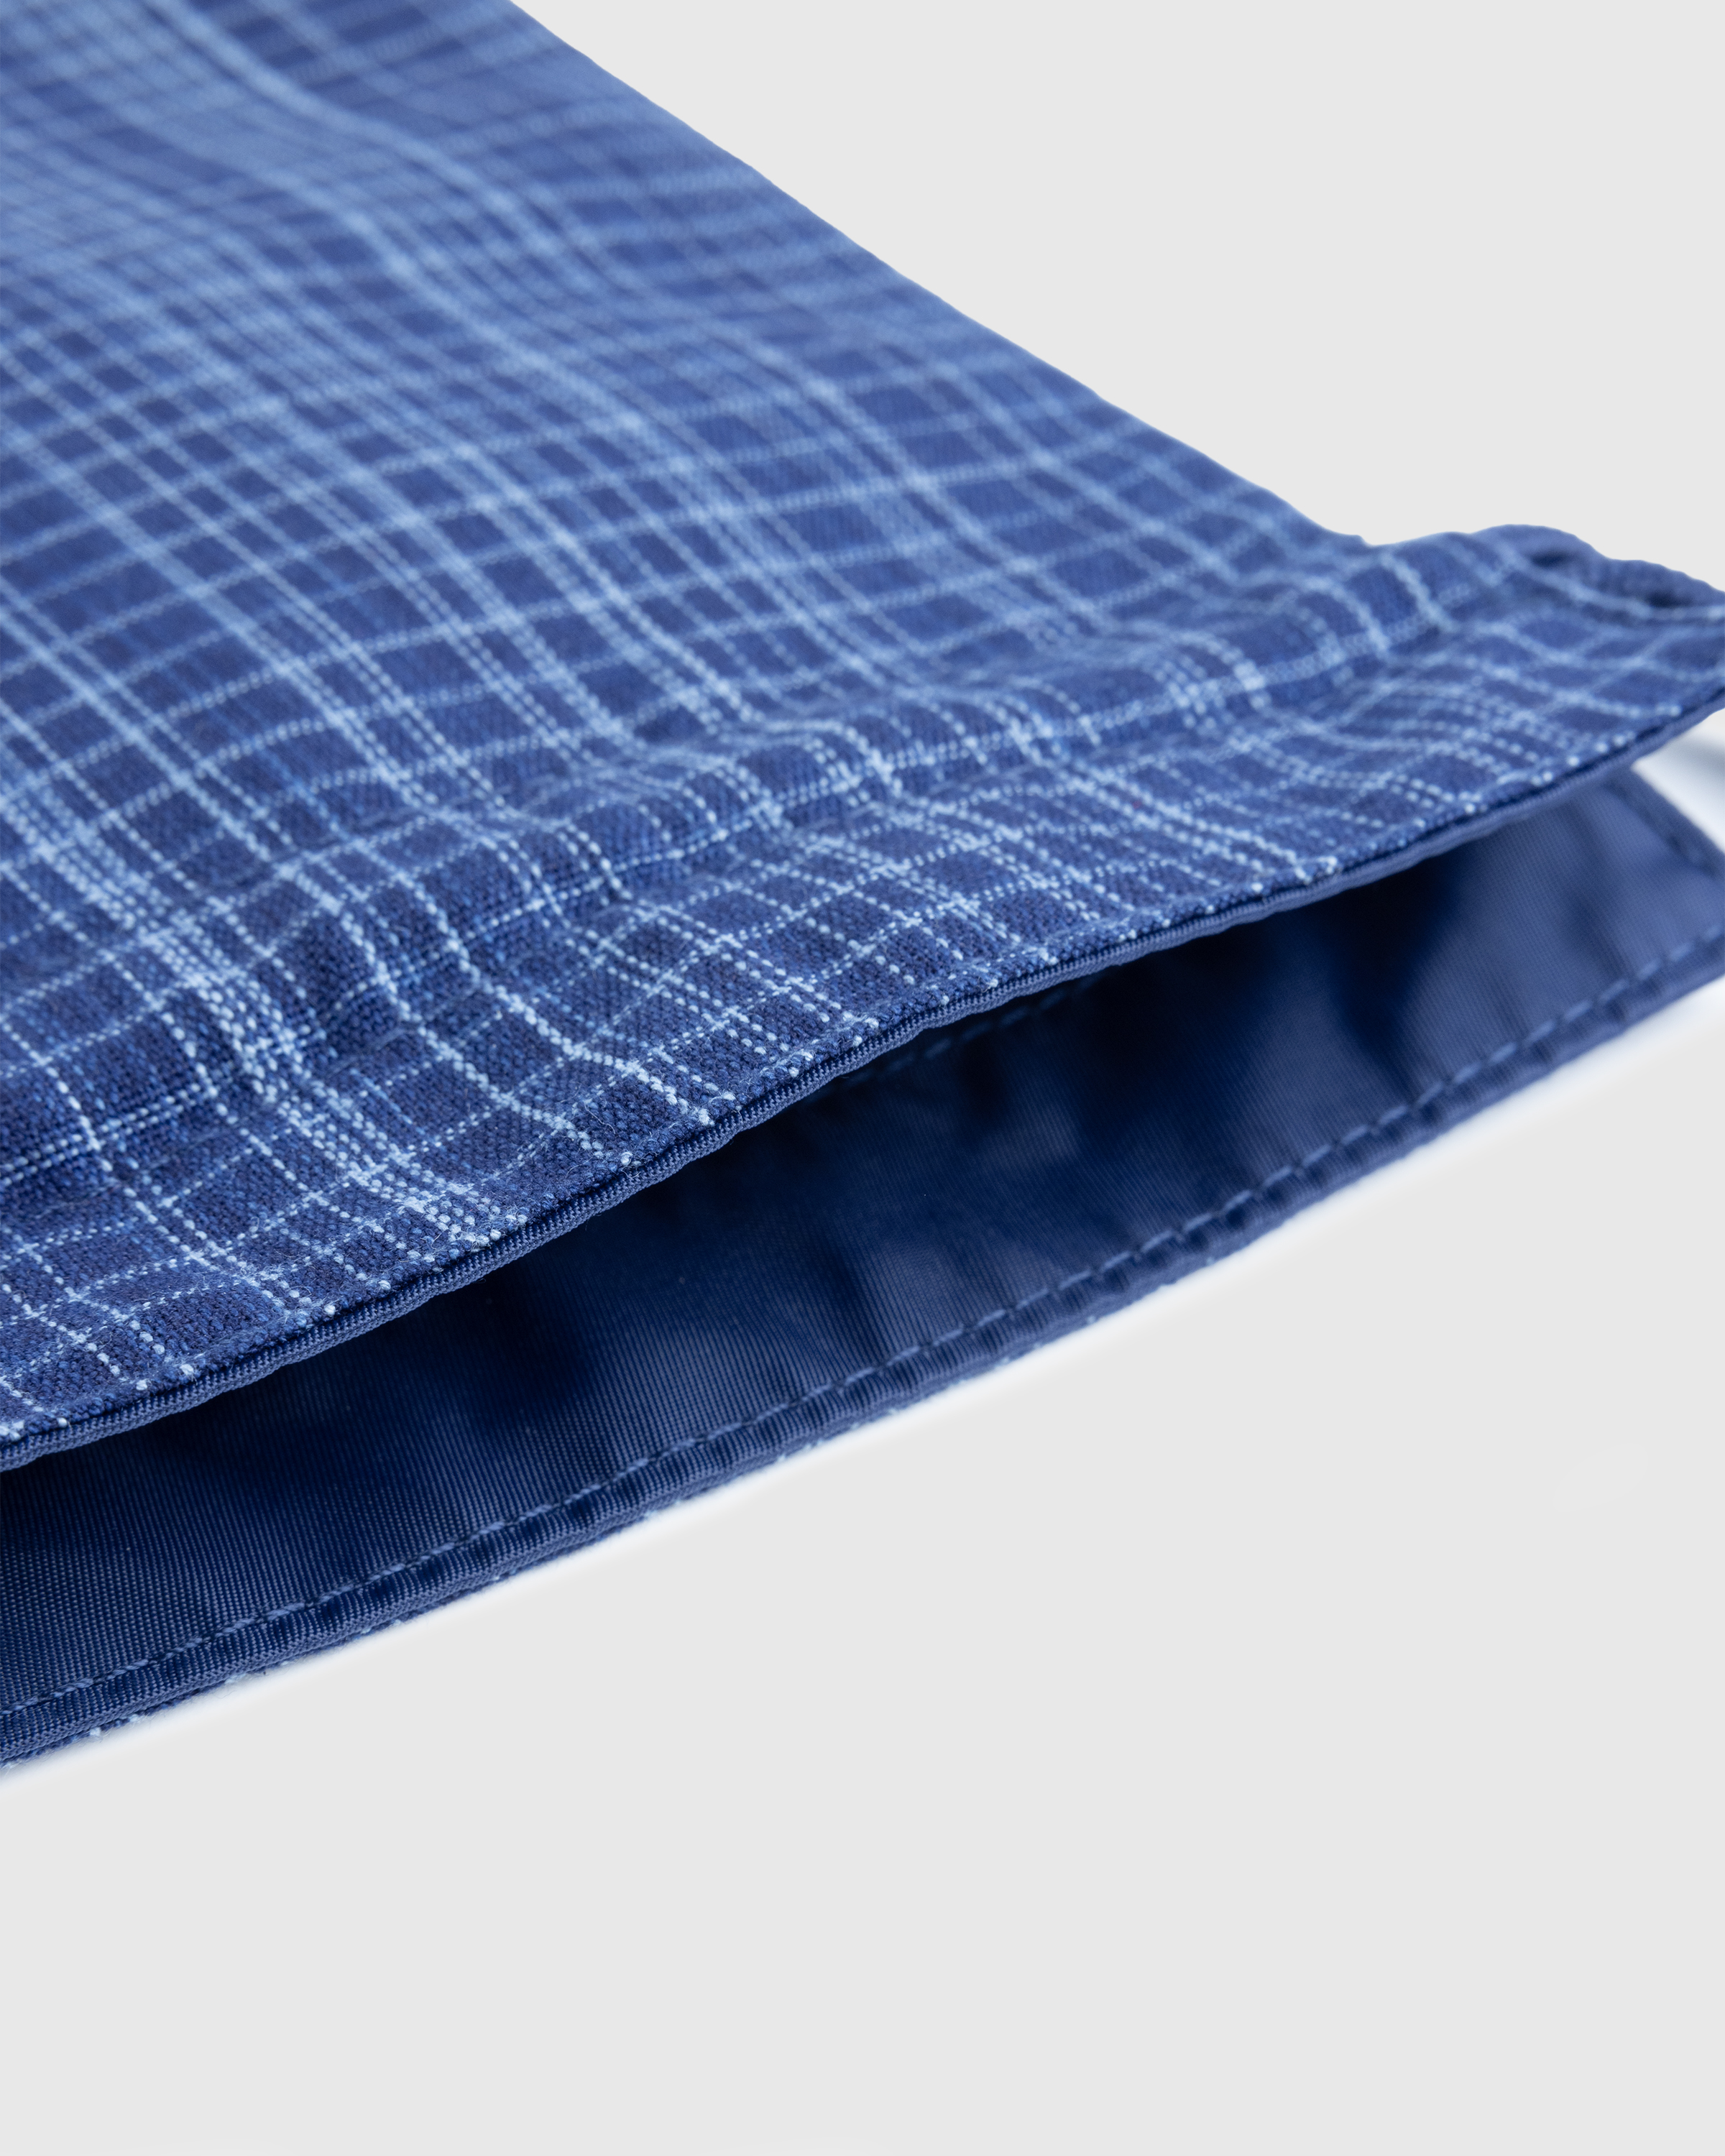 Human Made – Ningen-sei Drawstring Bag Indigo Blue - Bags - Blue - Image 3